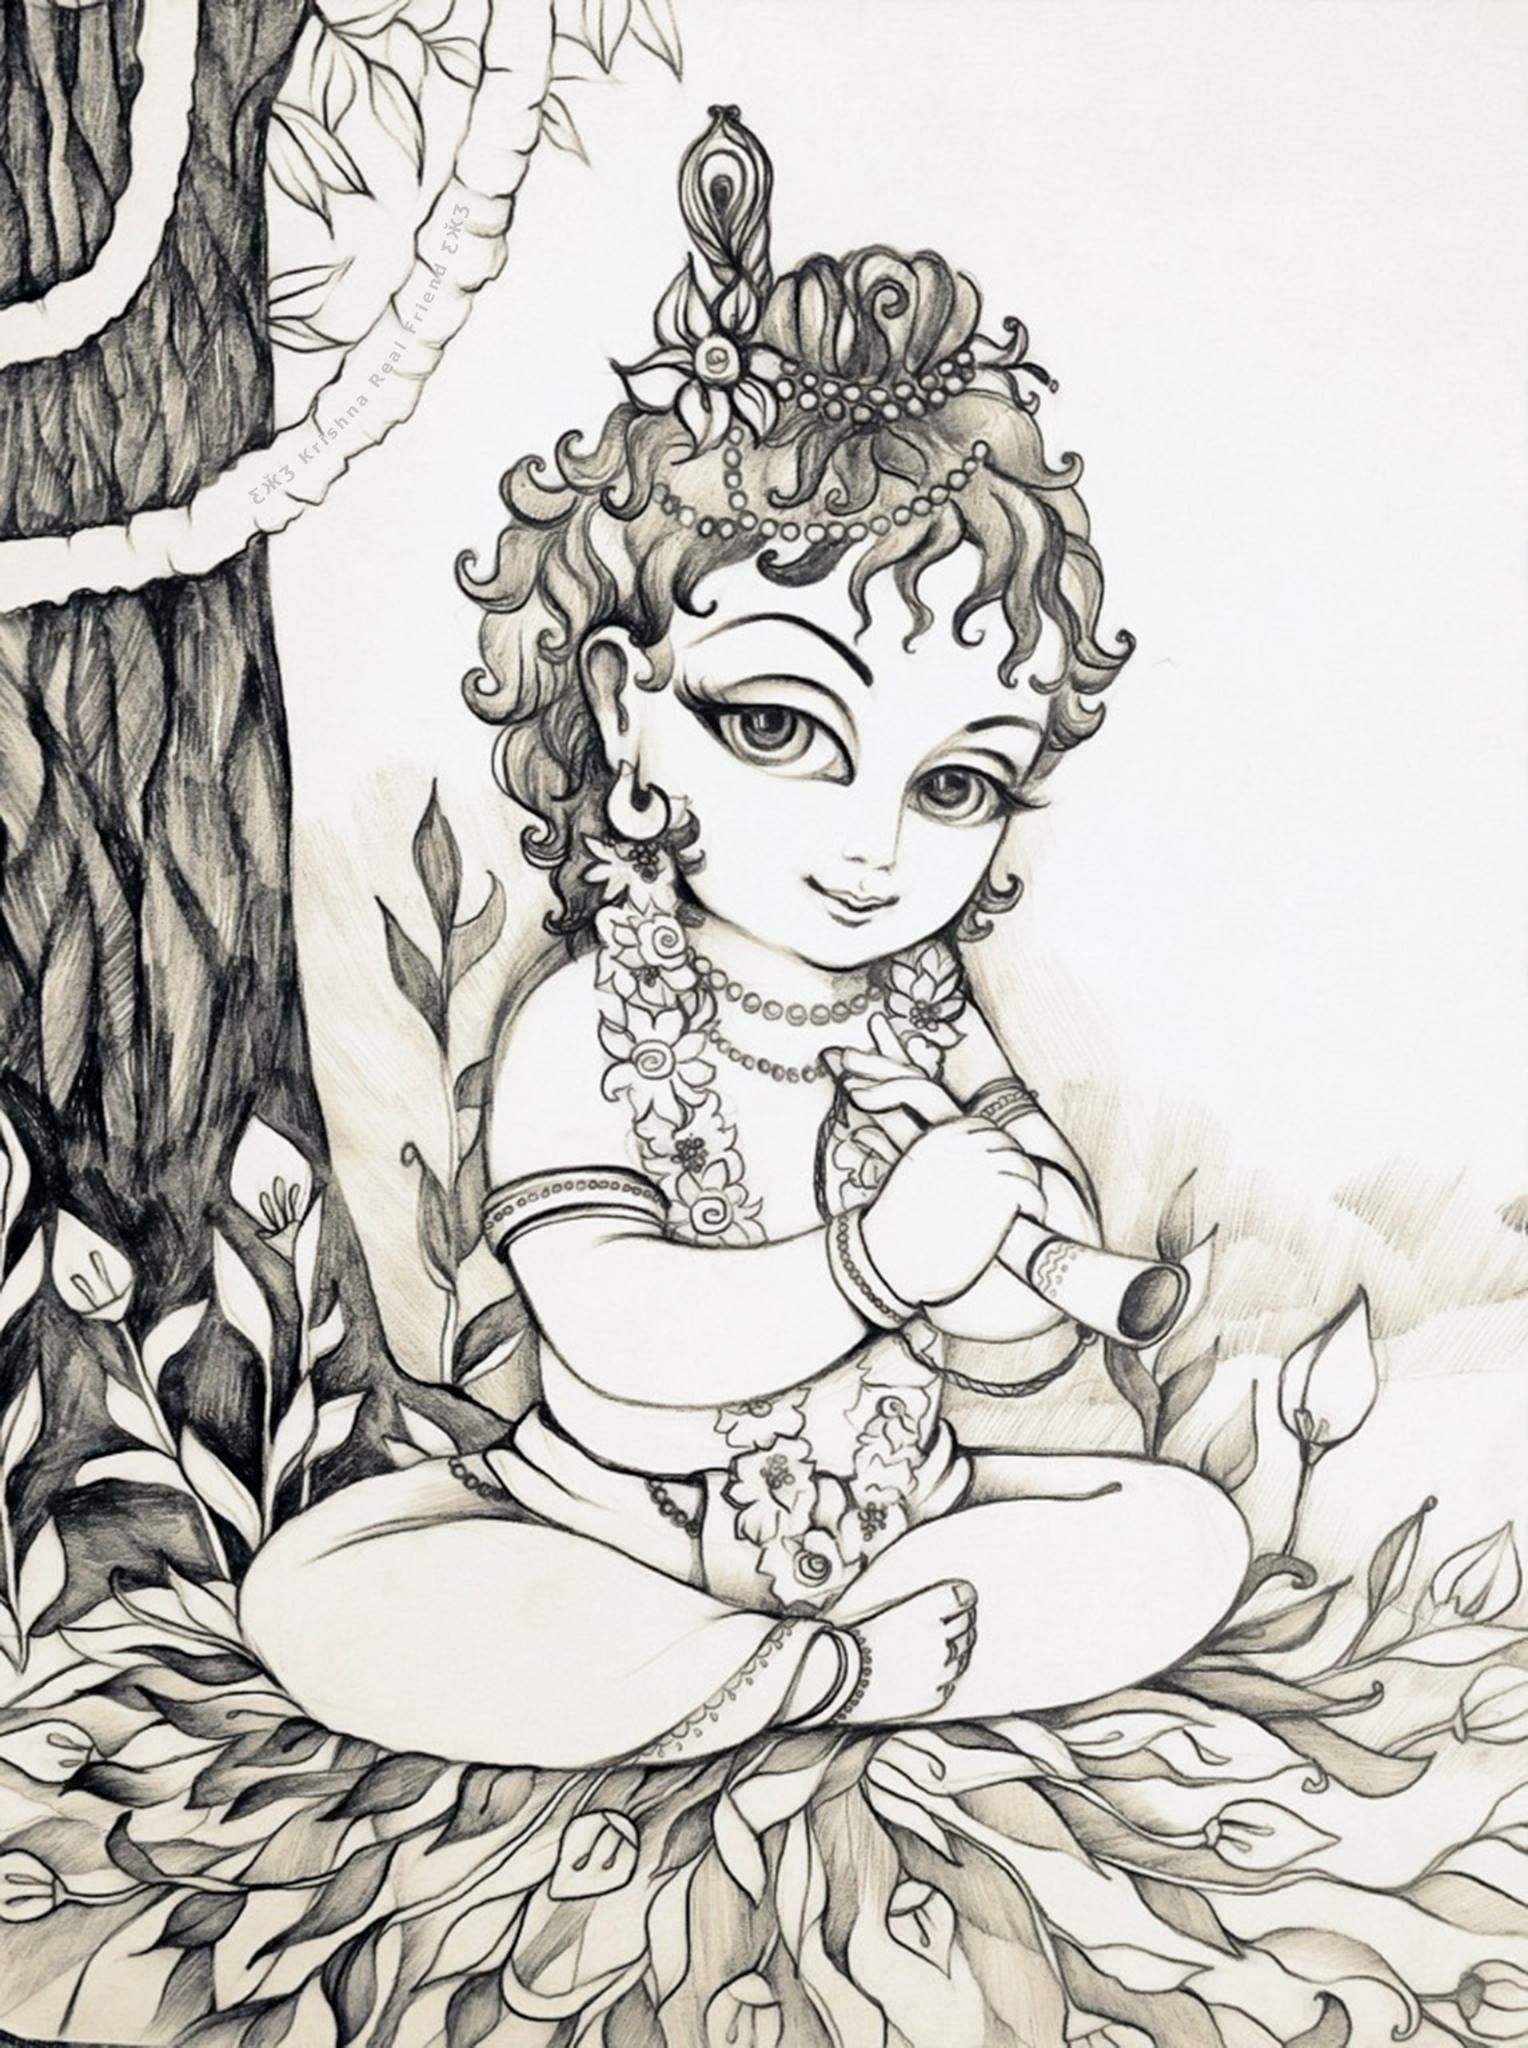 krishna drawing images, krishna ji ki drawing, krishna pencil drawing, krishna wallpaper drawing, lord krishna drawing images hd